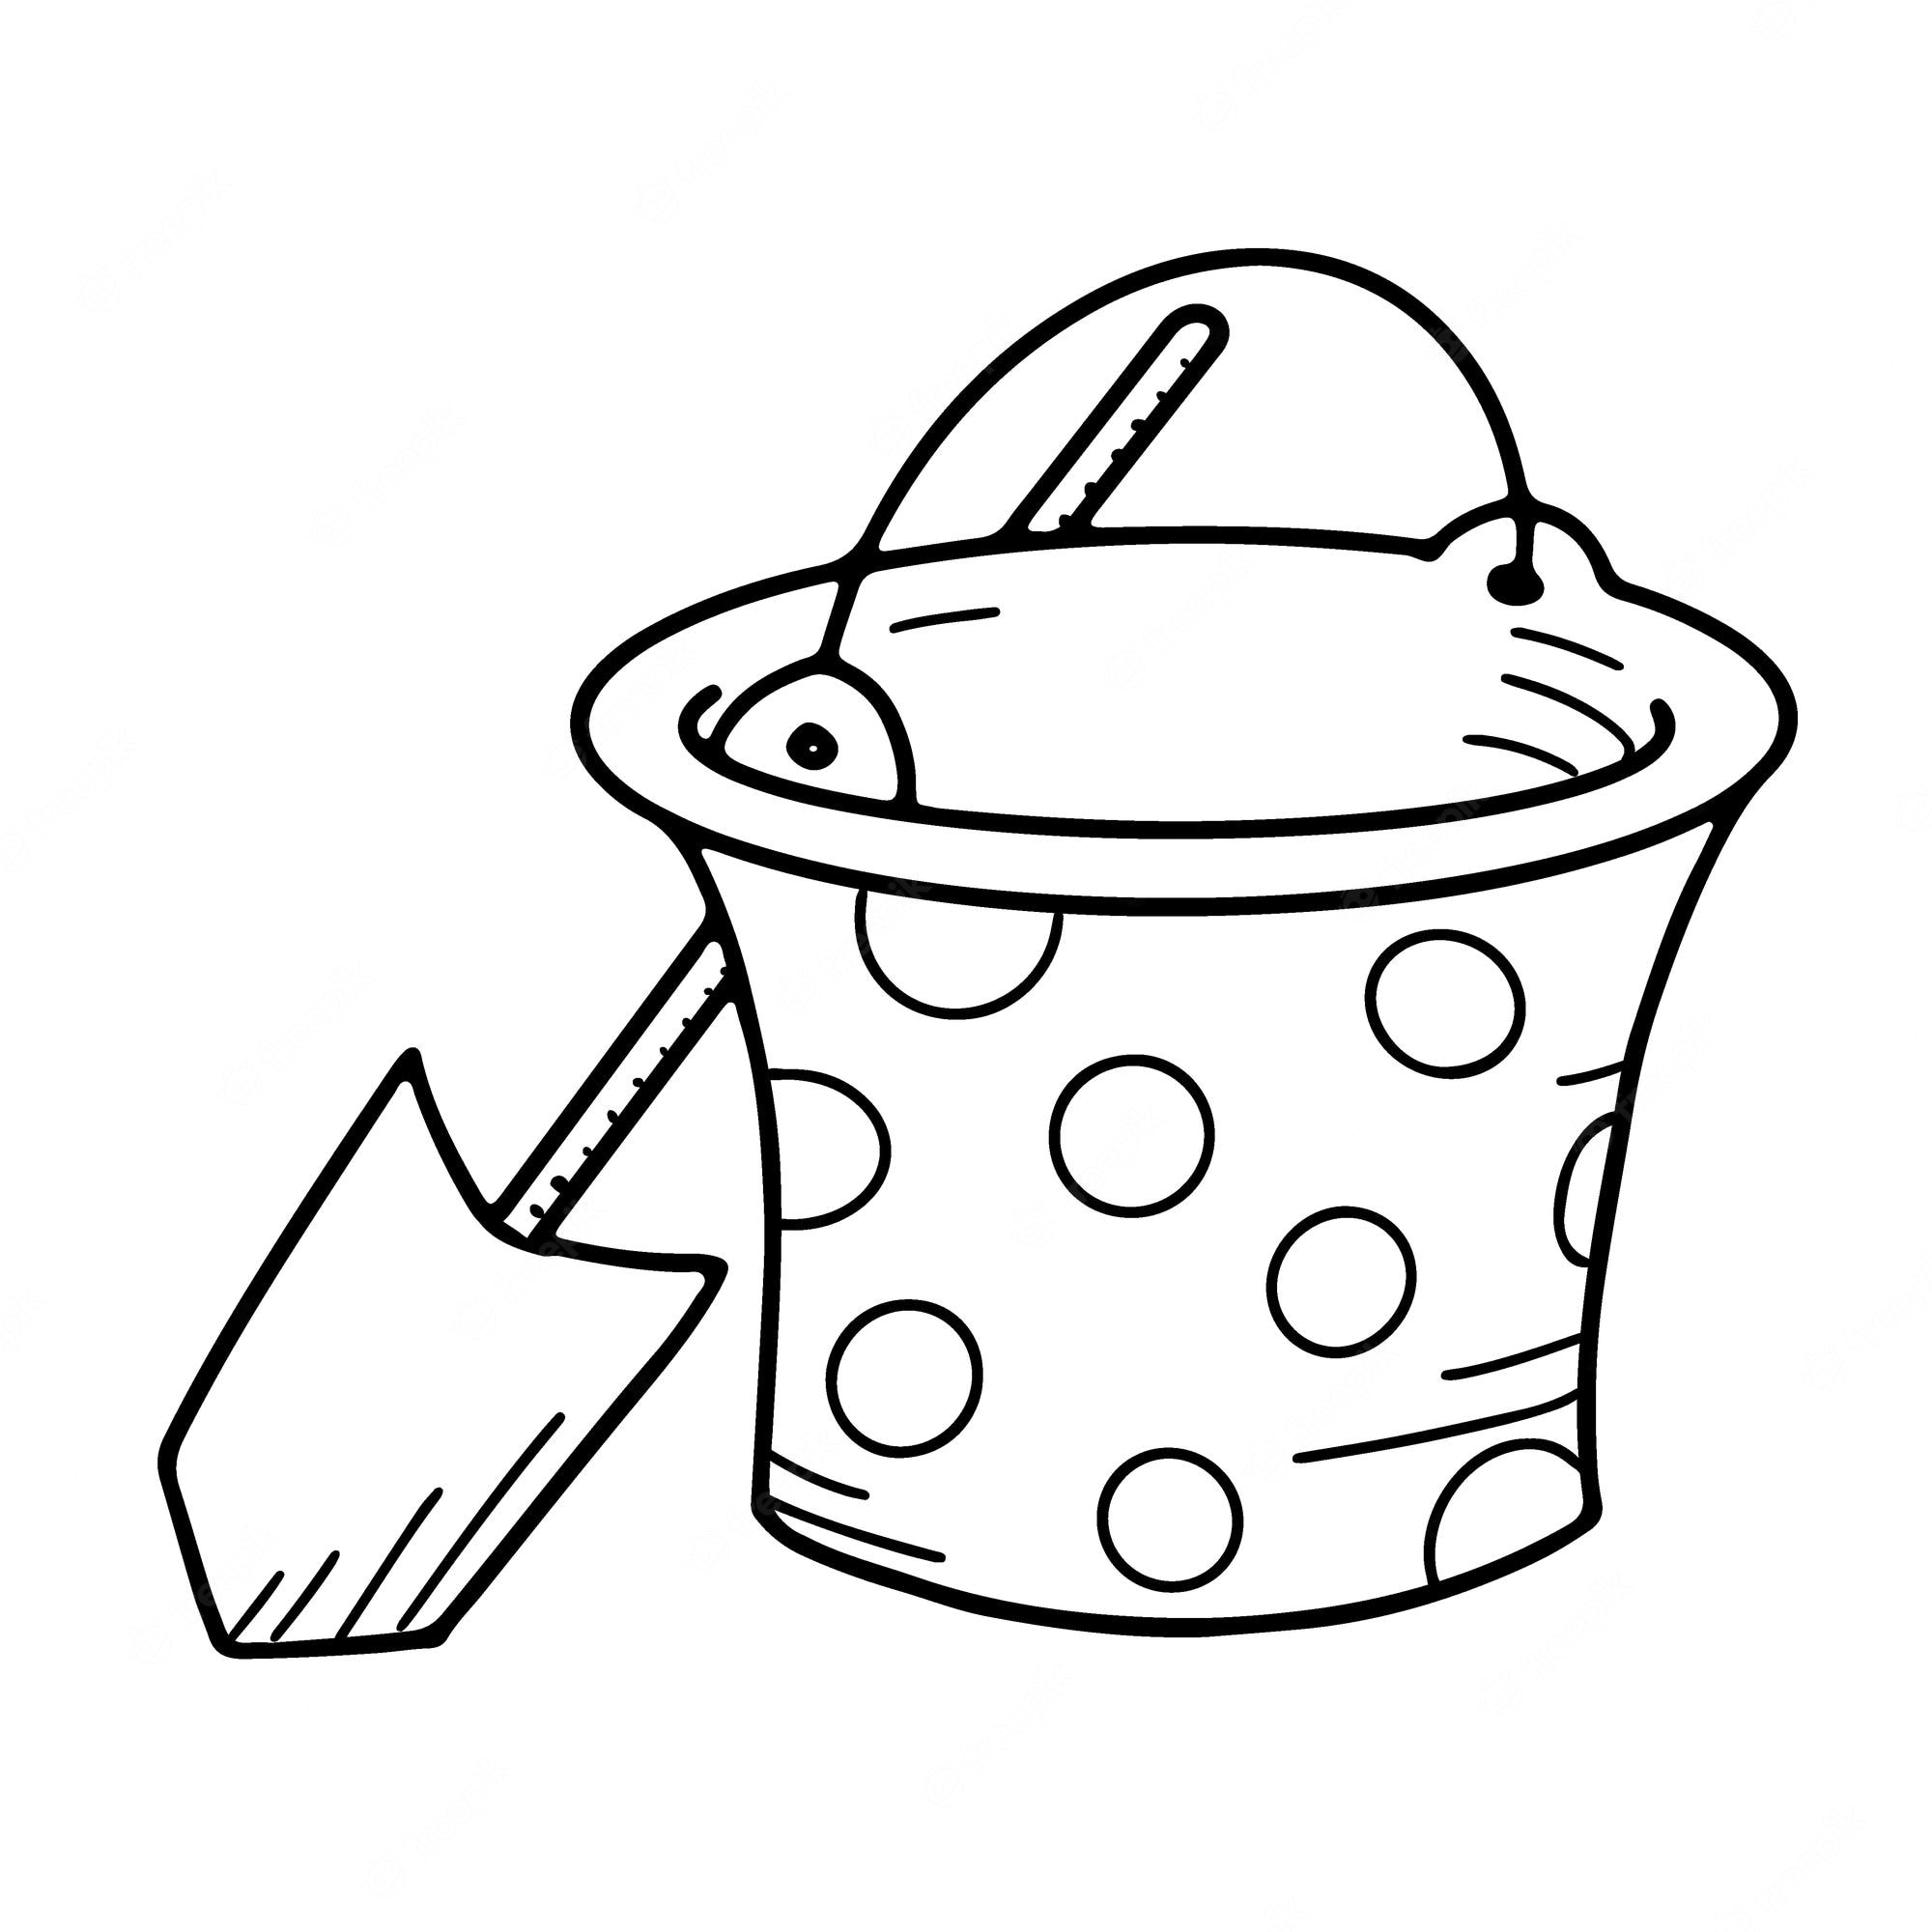 Bucket Drawing Images - Free Download on Freepik